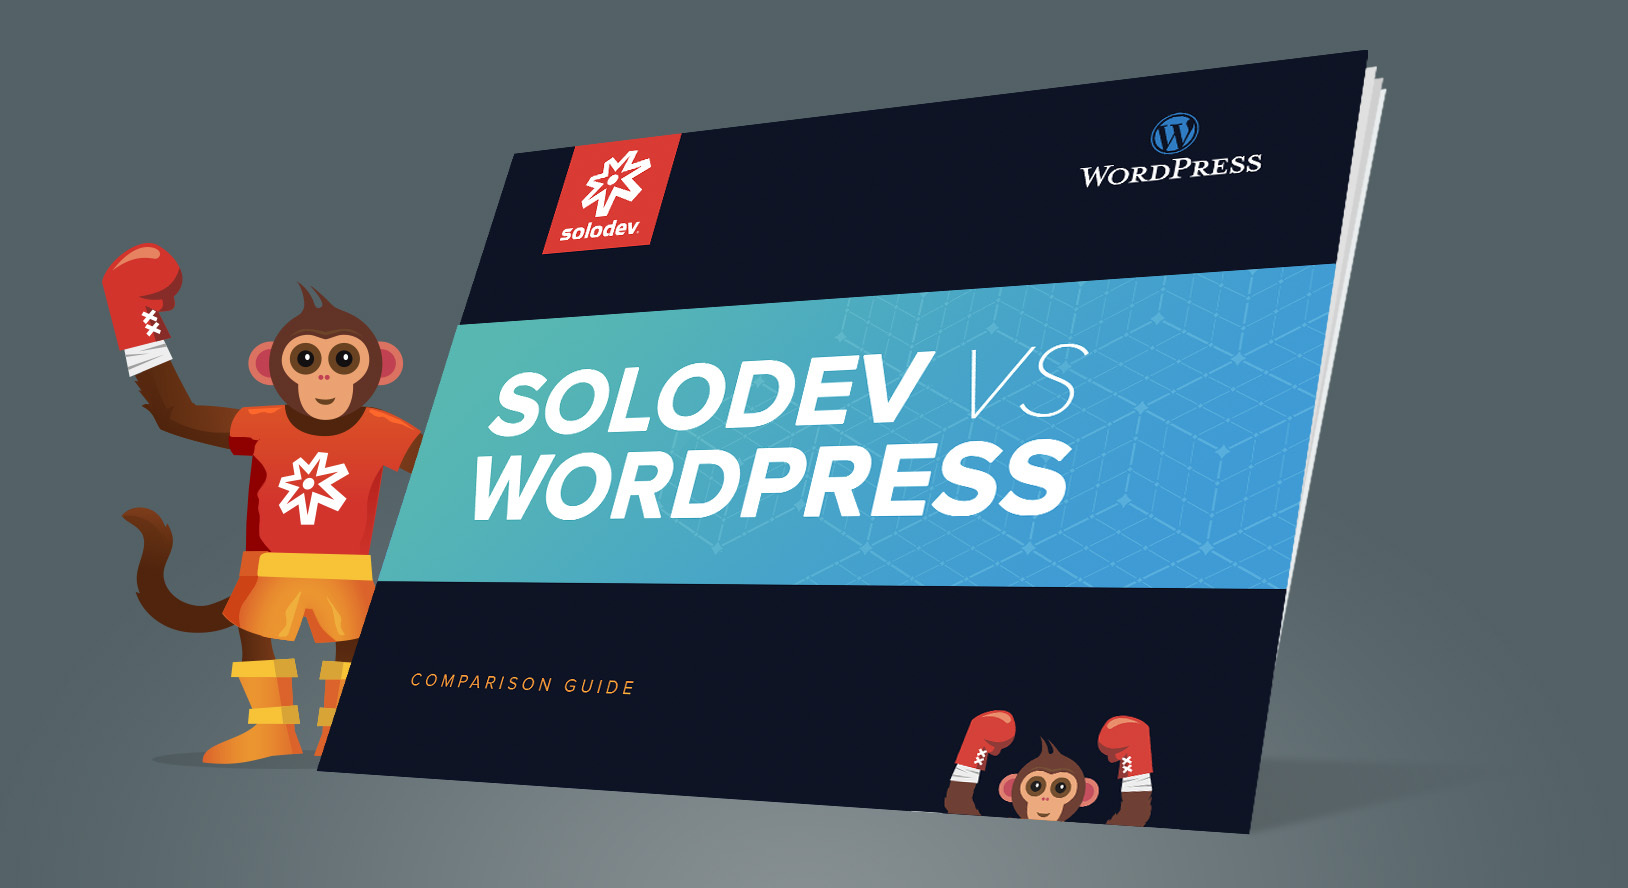 Solodev vs. WordPress: Comparison Guide for CMS Platforms